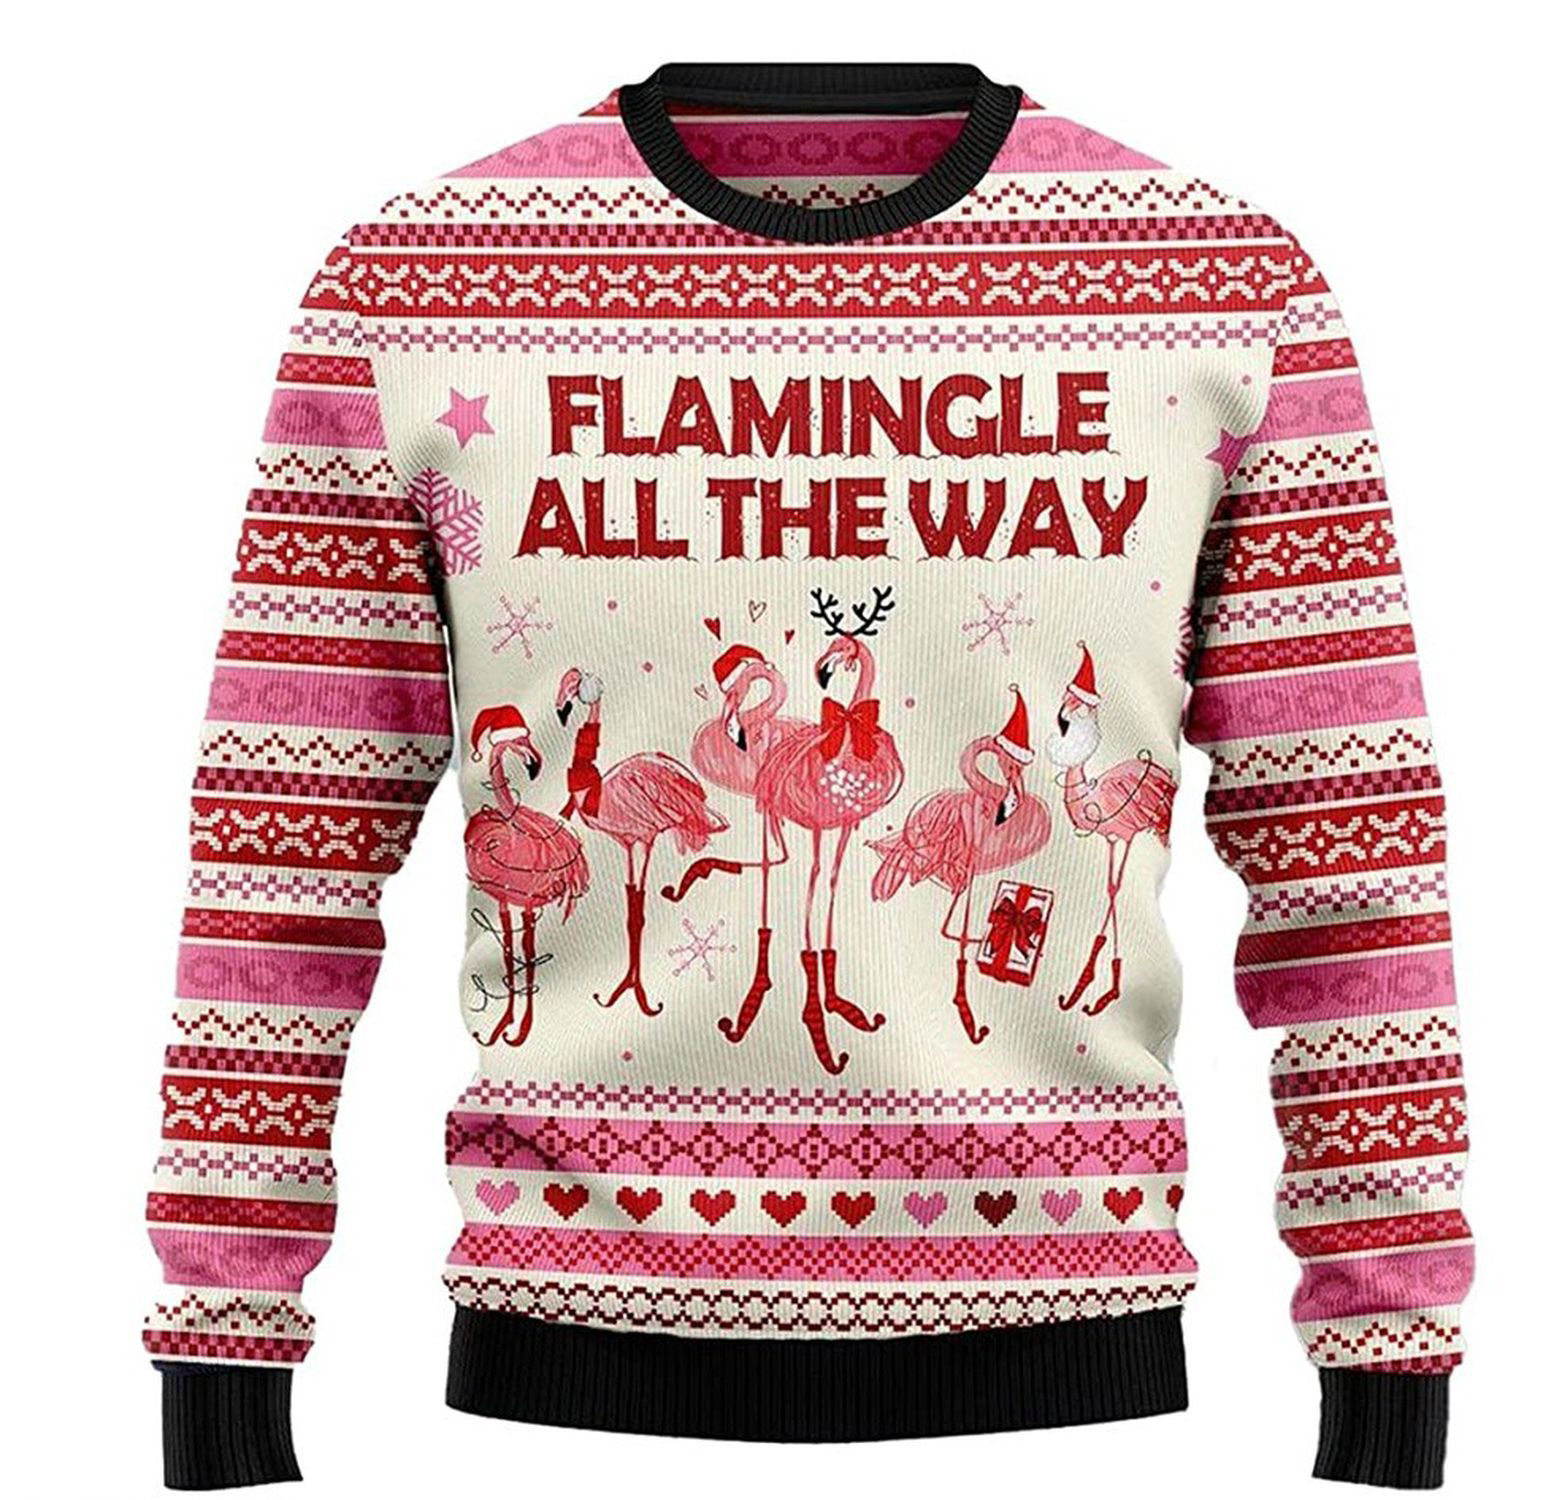 Flamingo flamingle all the way ugly christmas sweater